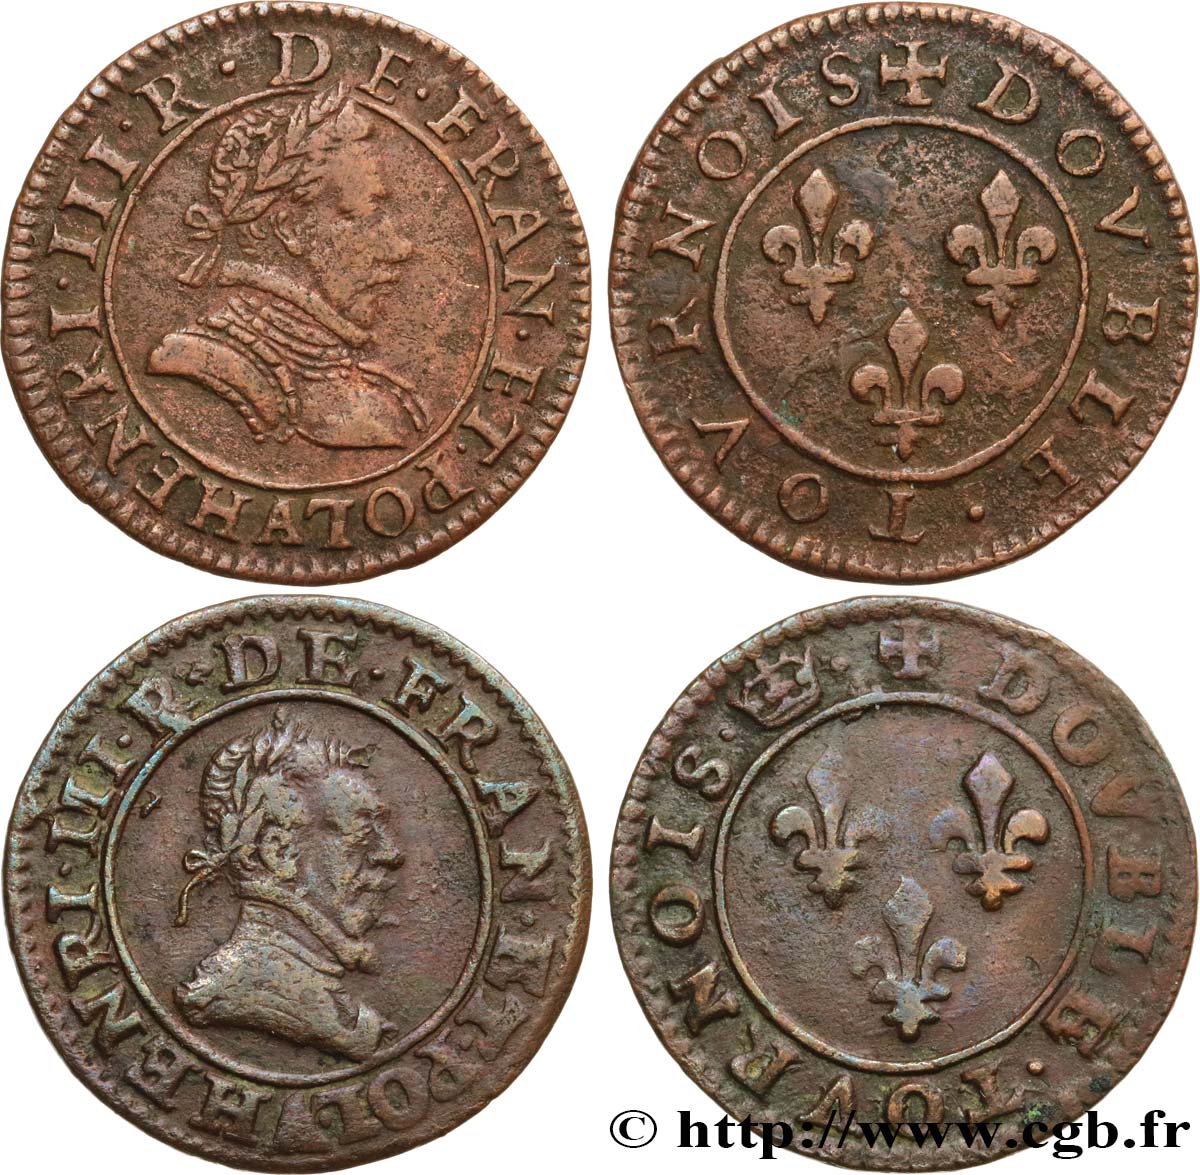 HENRY III Lot de 2 monnaies royales n.d. Paris XF